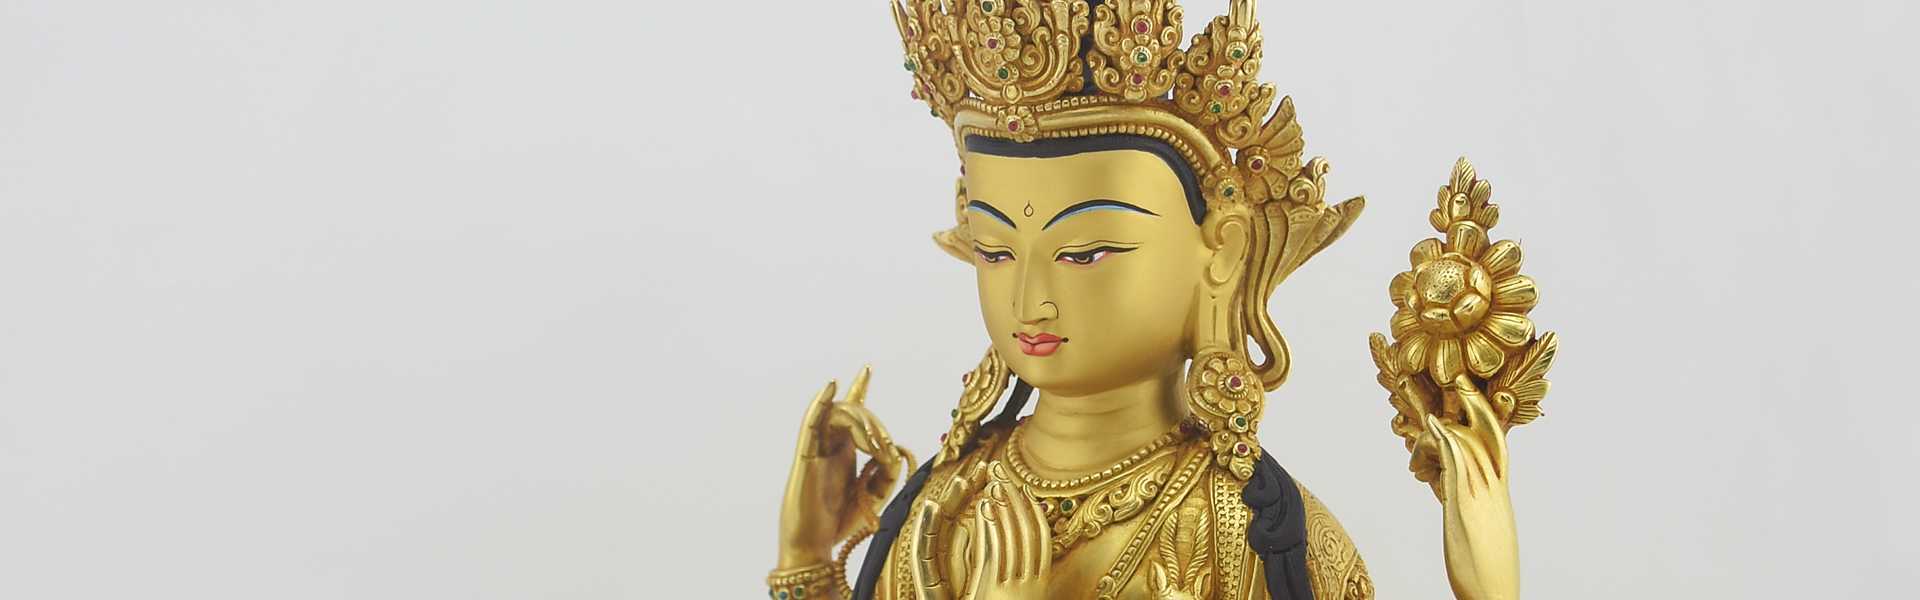 14" Chenrezig Statue, Gold Gilded with Floating Mala, Masterpiece